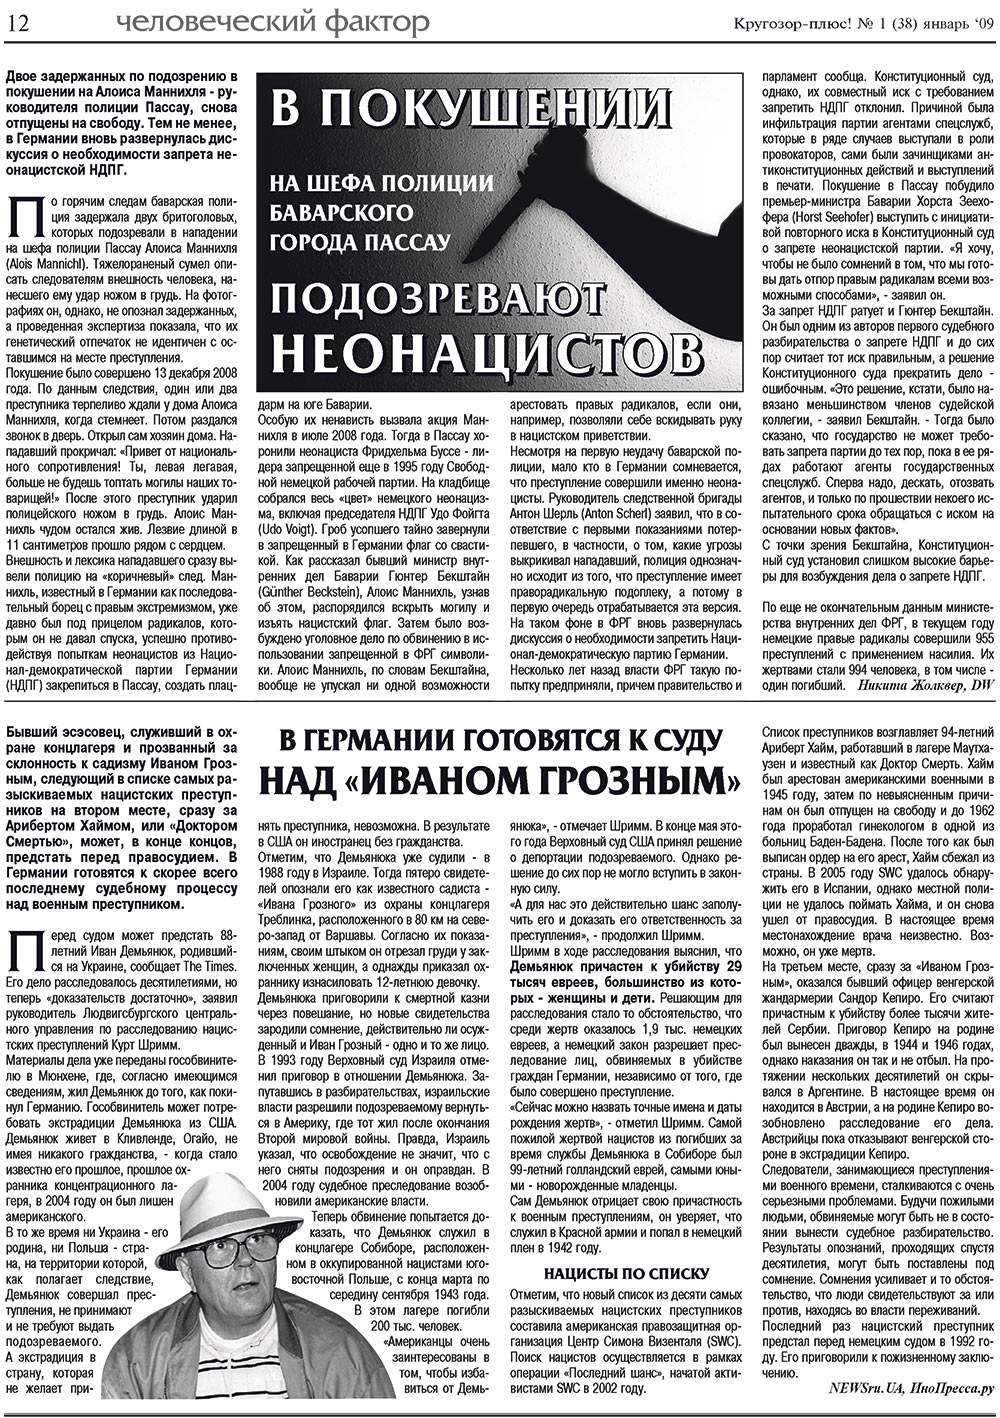 Кругозор плюс! (газета). 2009 год, номер 1, стр. 12